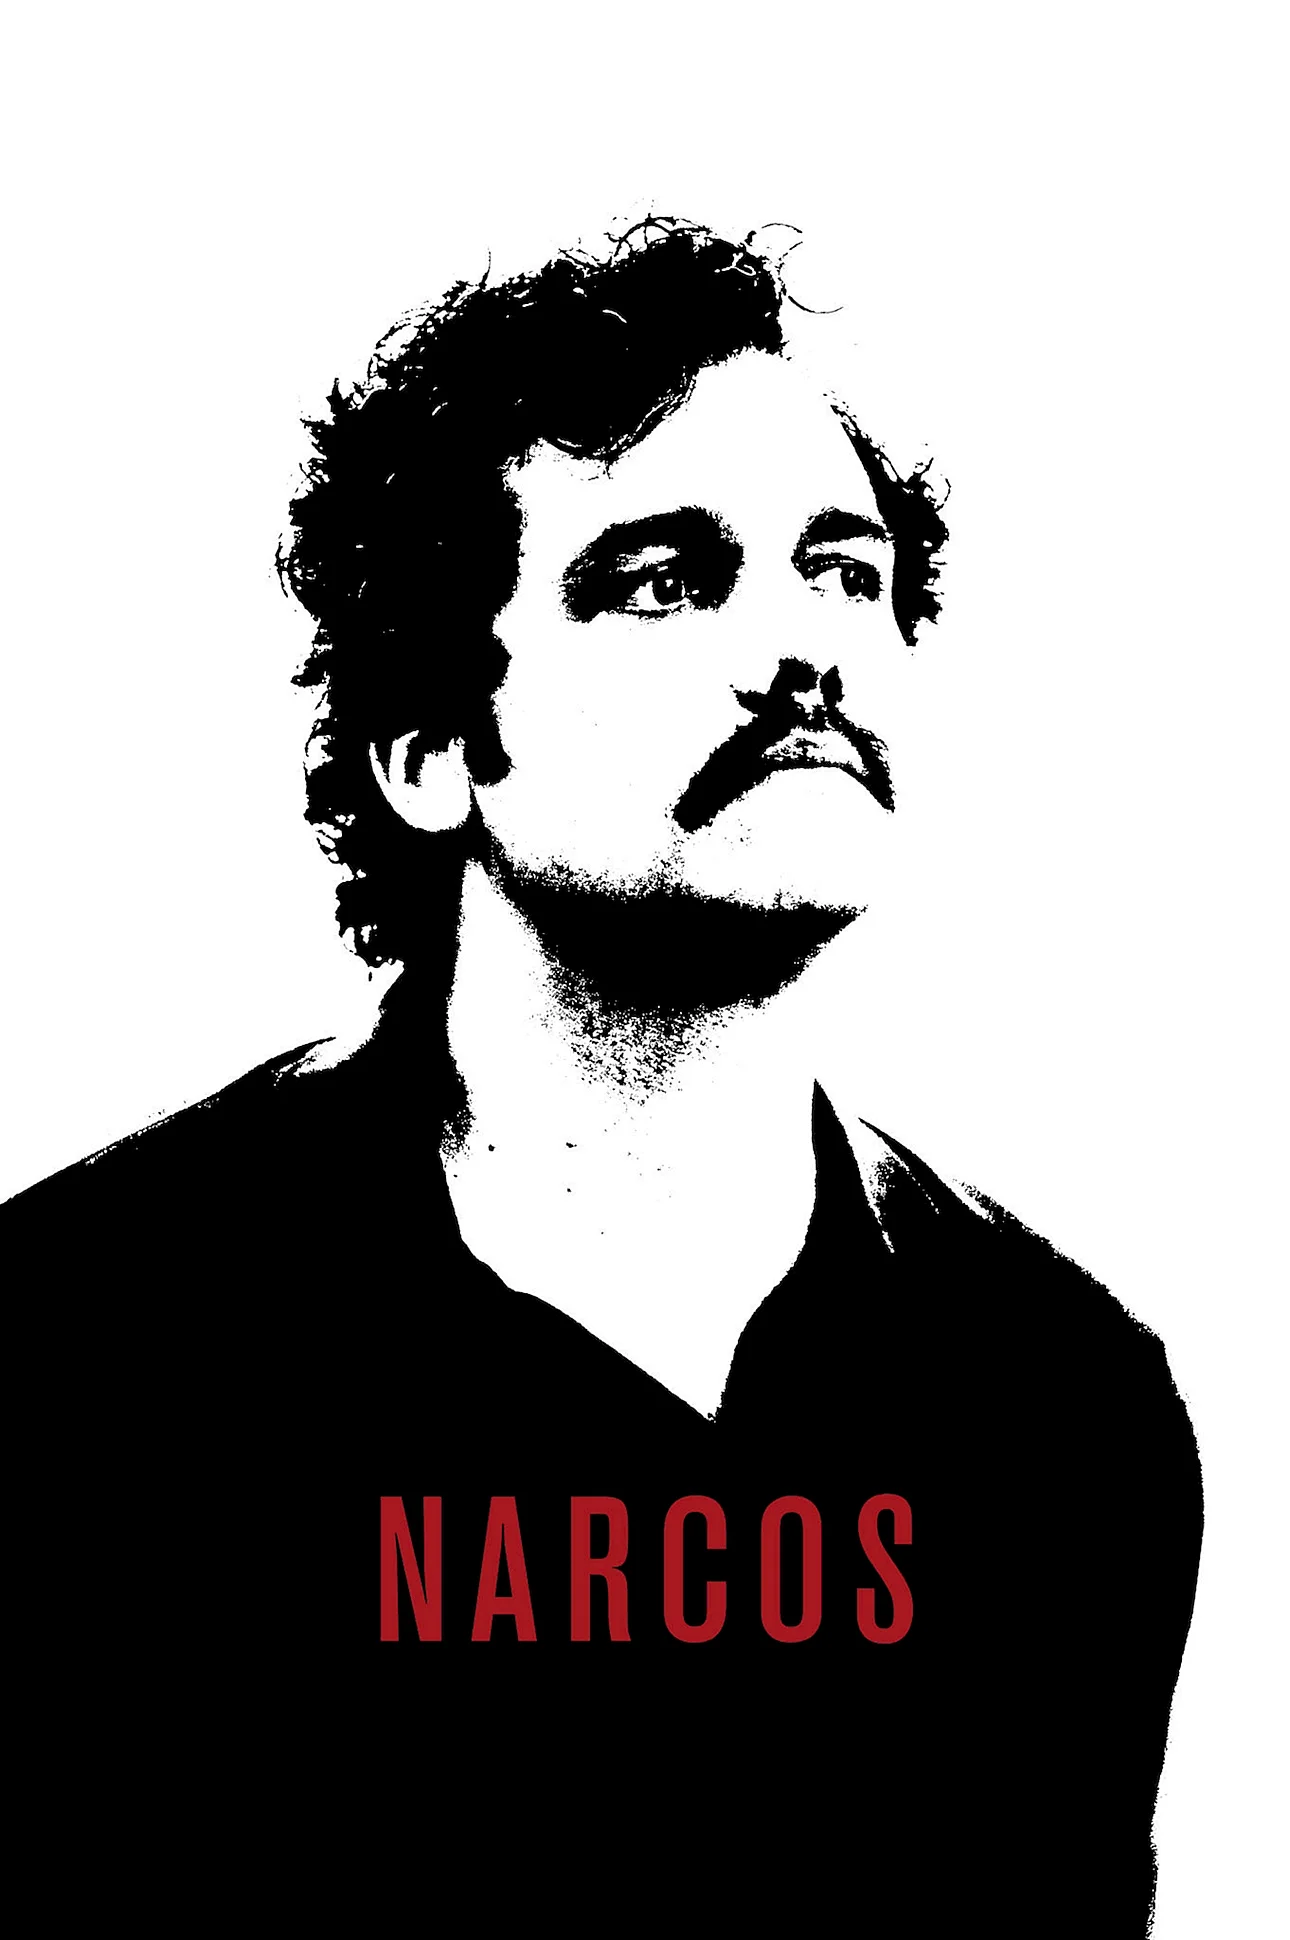 Pablo Escobar Poster Wallpaper For iPhone